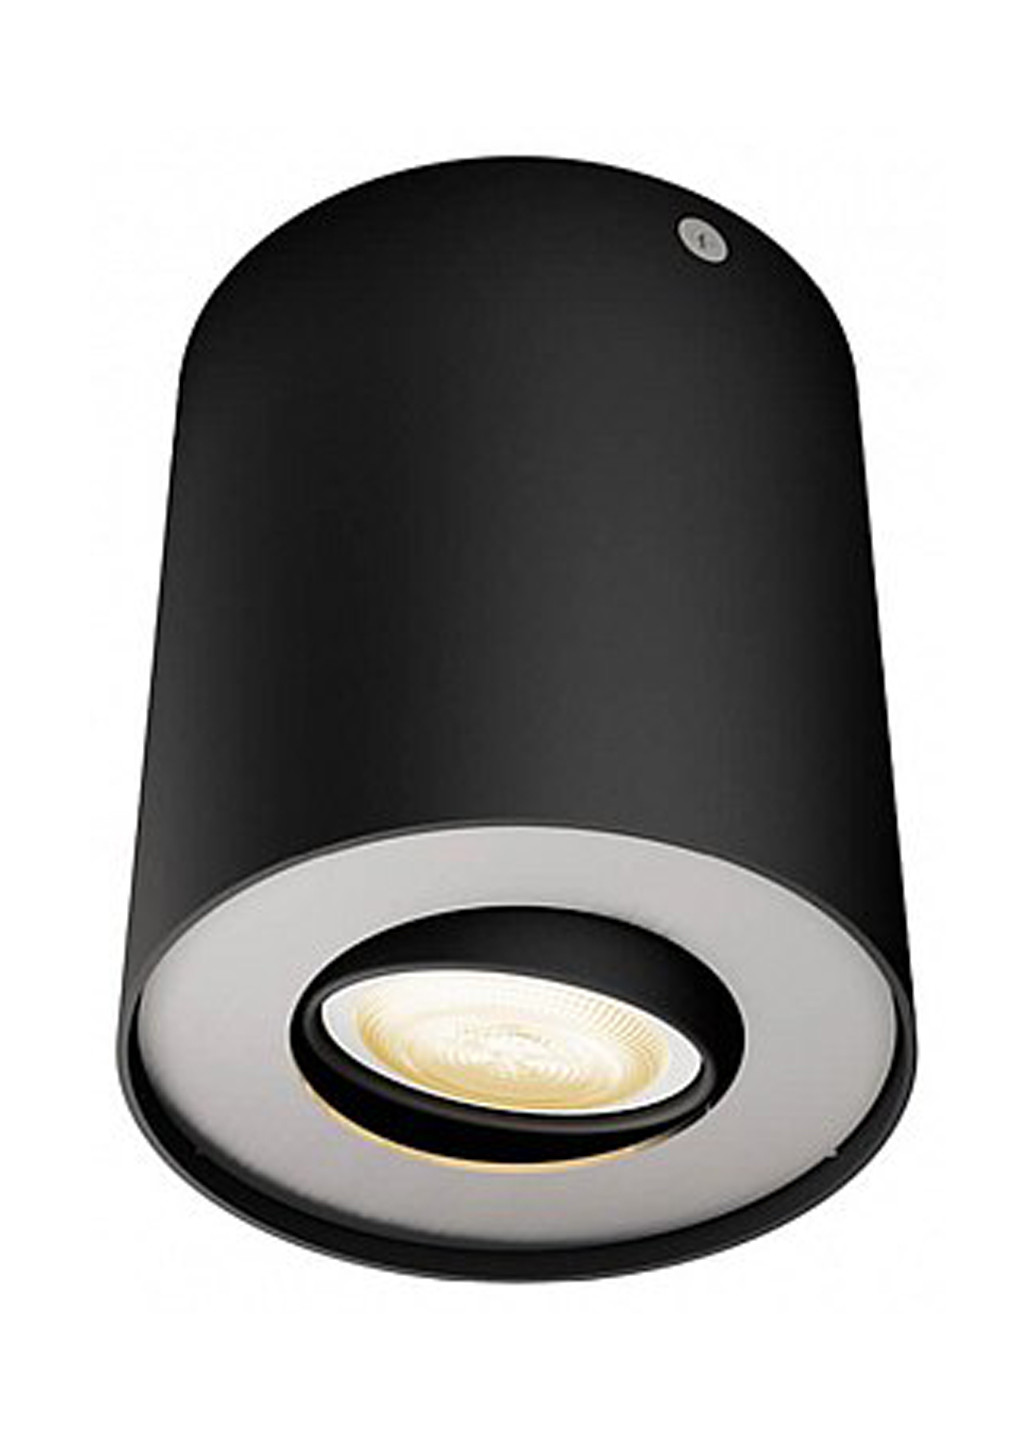 Смарт-светильник Pillar Hue single spot black 1x5.5W (56330/30/P7) Philips смарт pillar hue single spot black 1x5.5w (56330/30/p7) (142289802)